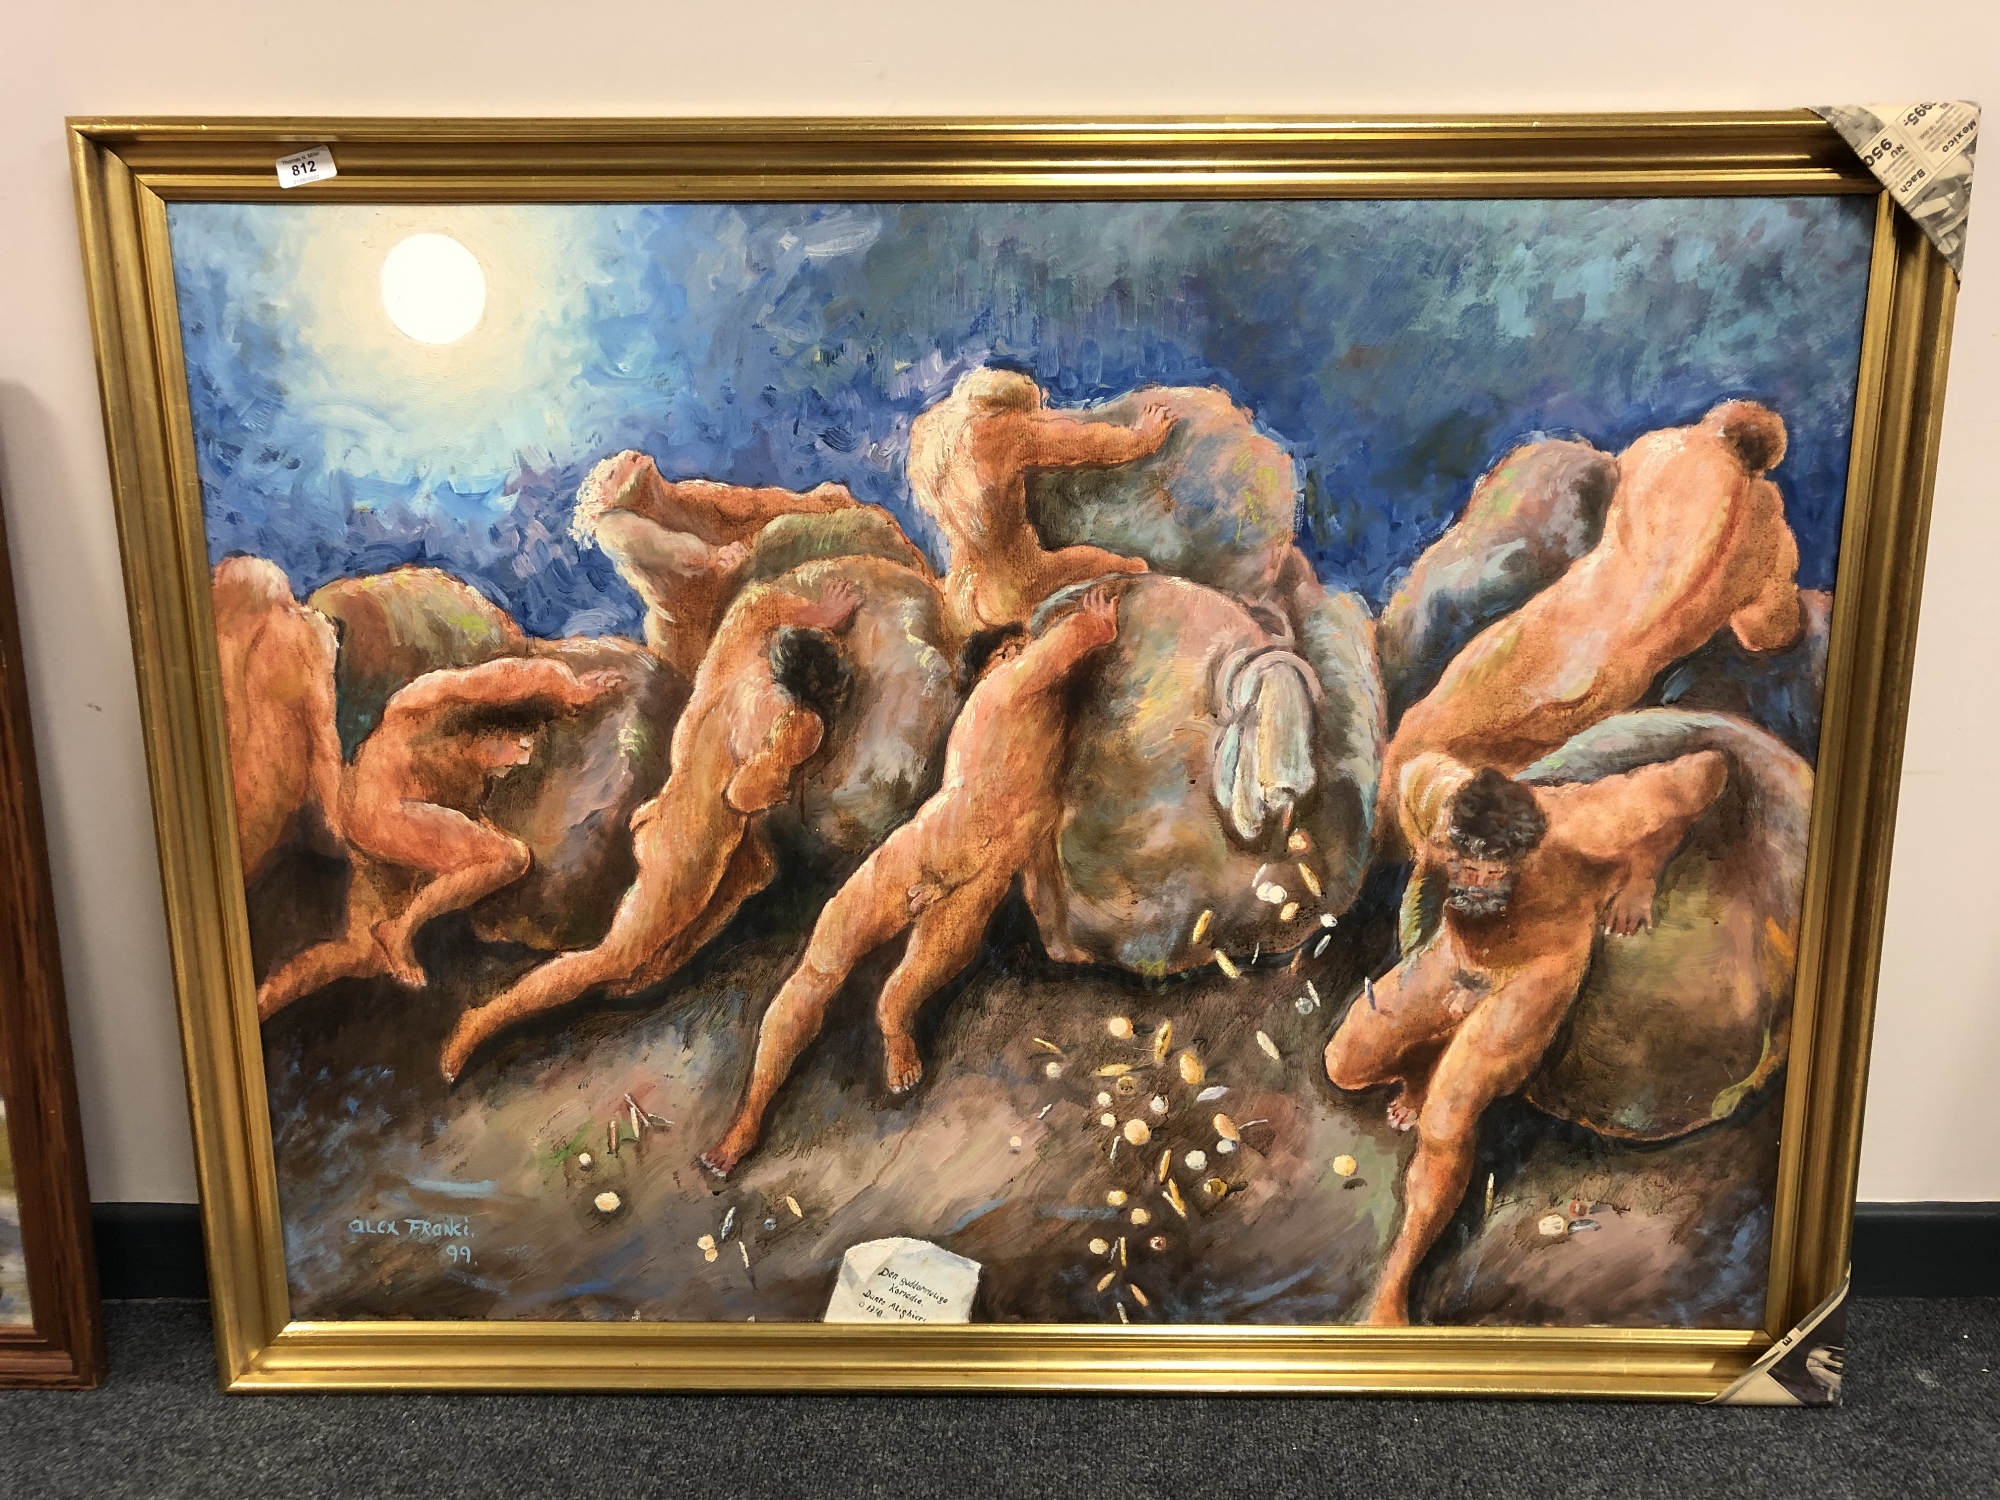 Continental school : Figures by rocks, oil on canvas, 115 cm x 84 cm.